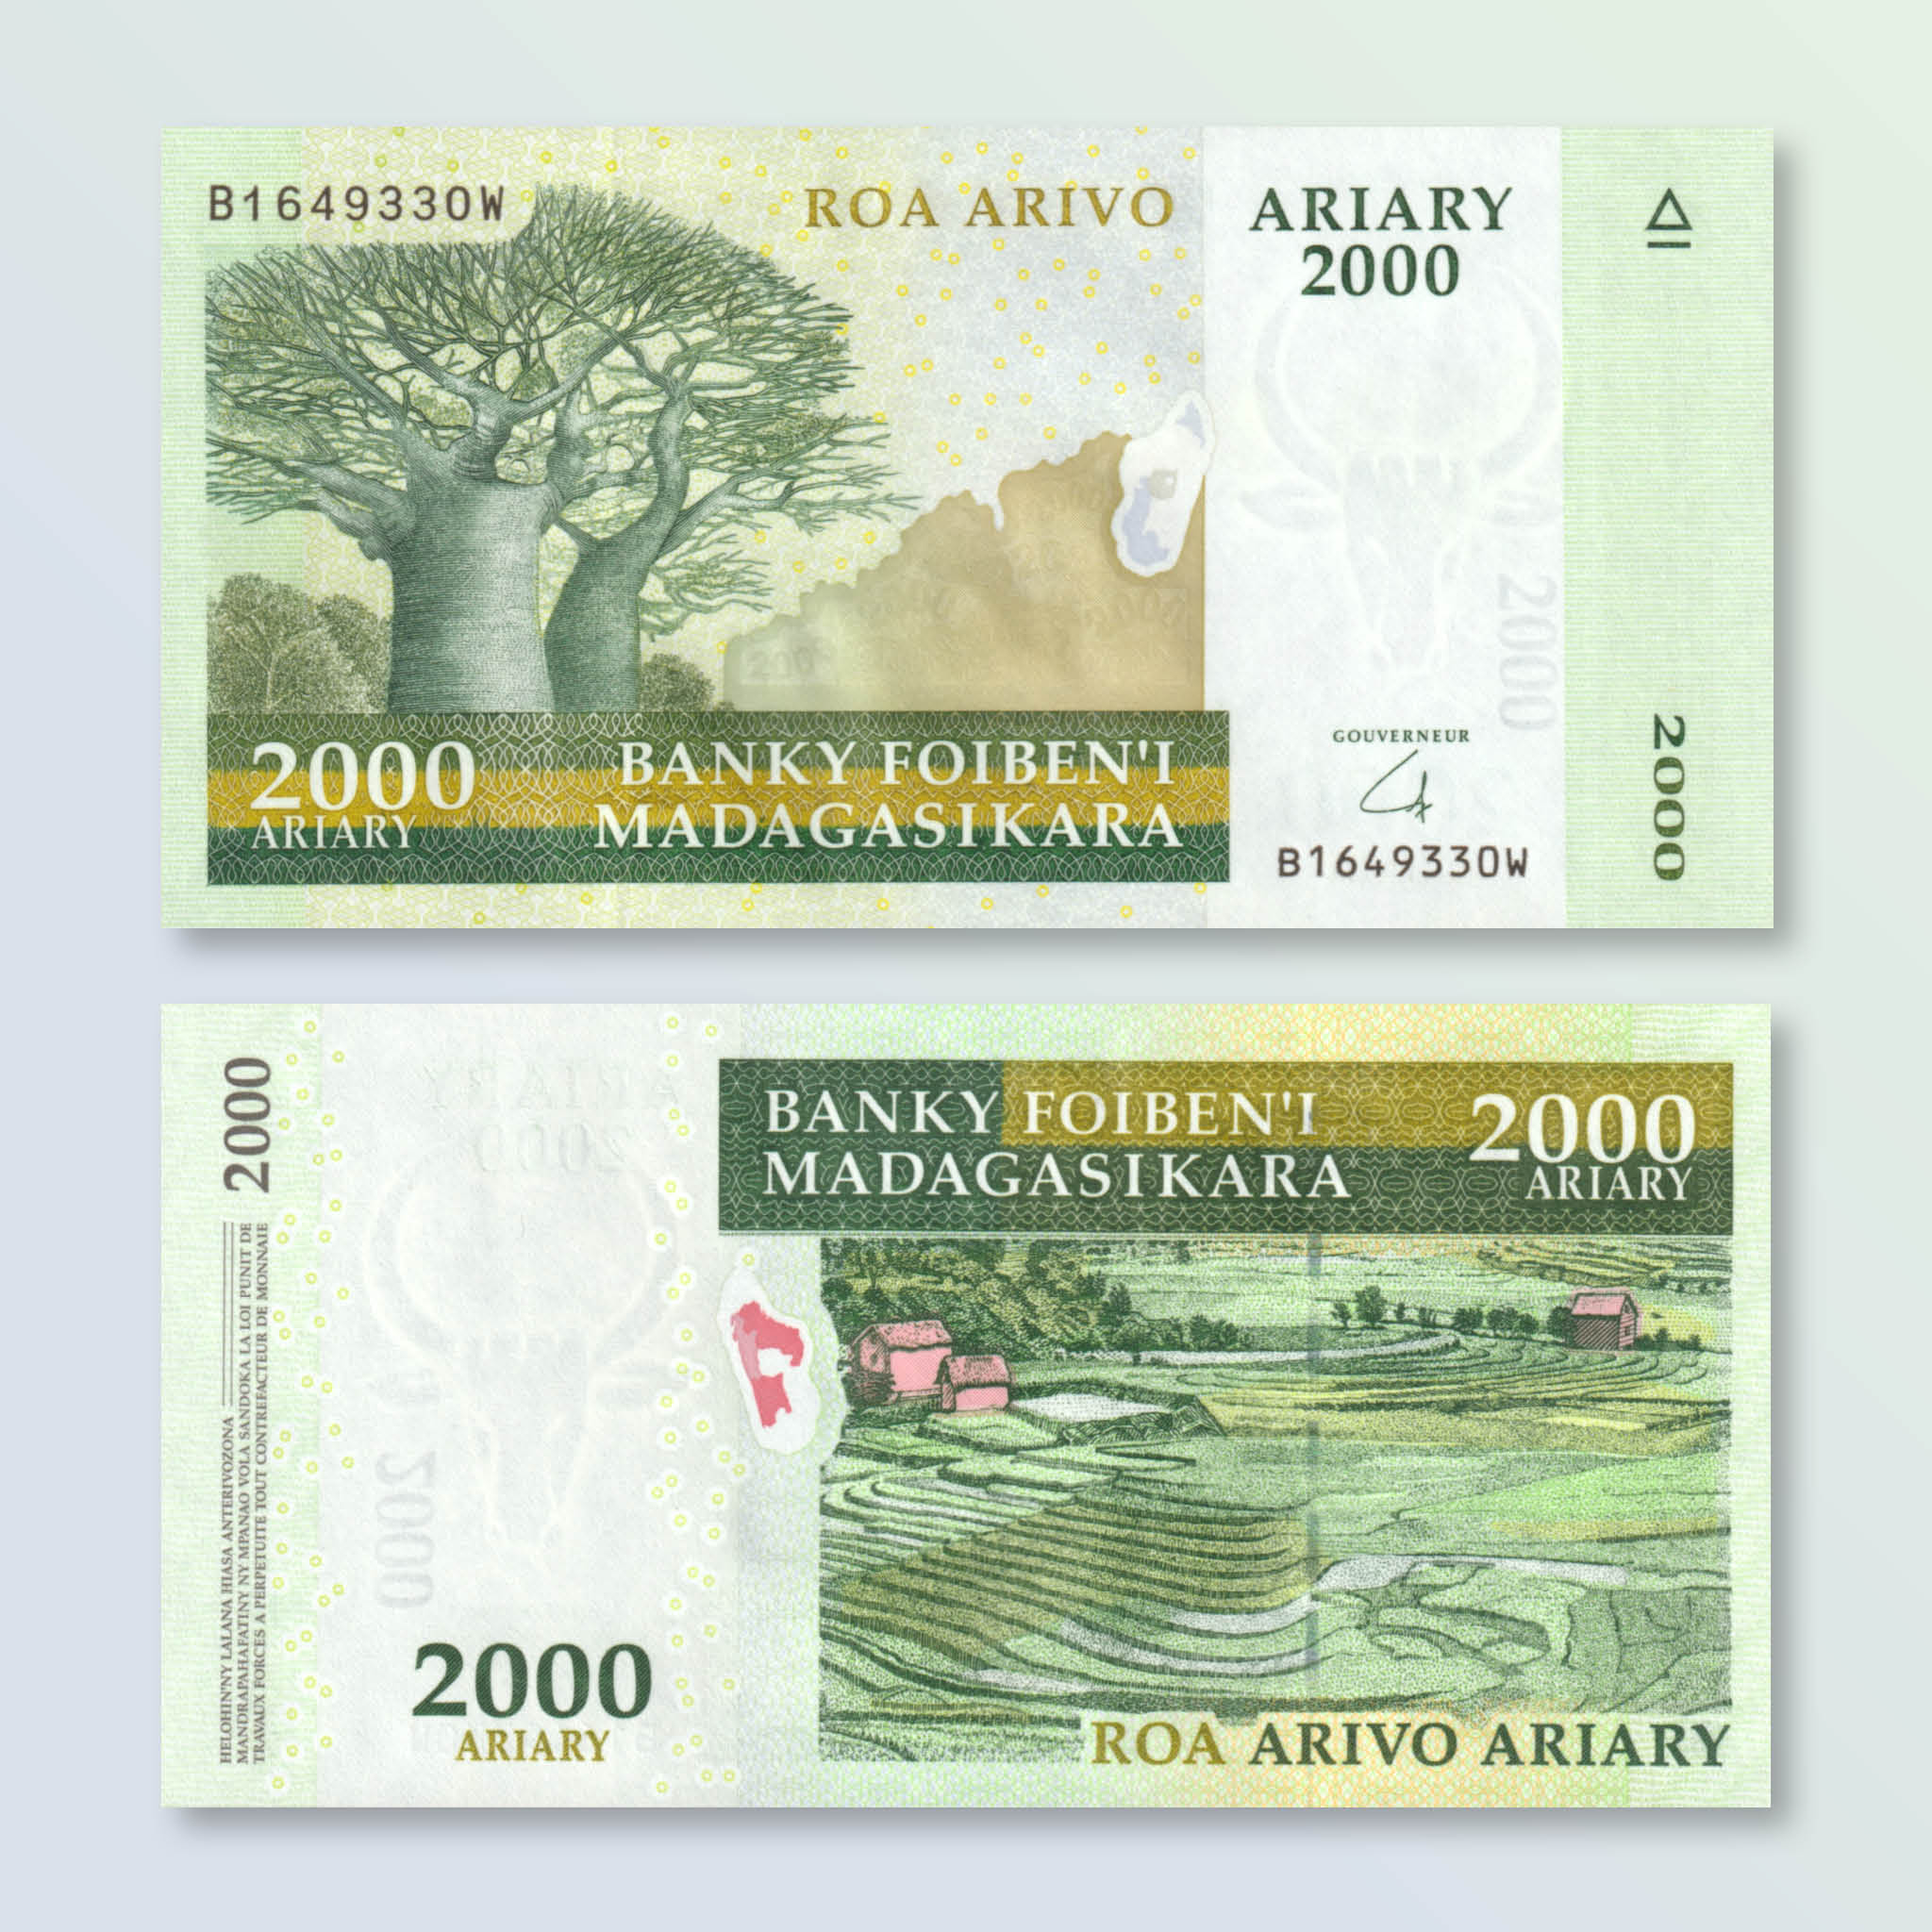 Madagascar 2000 Ariary, 2014, B327b, P96, UNC - Robert's World Money - World Banknotes